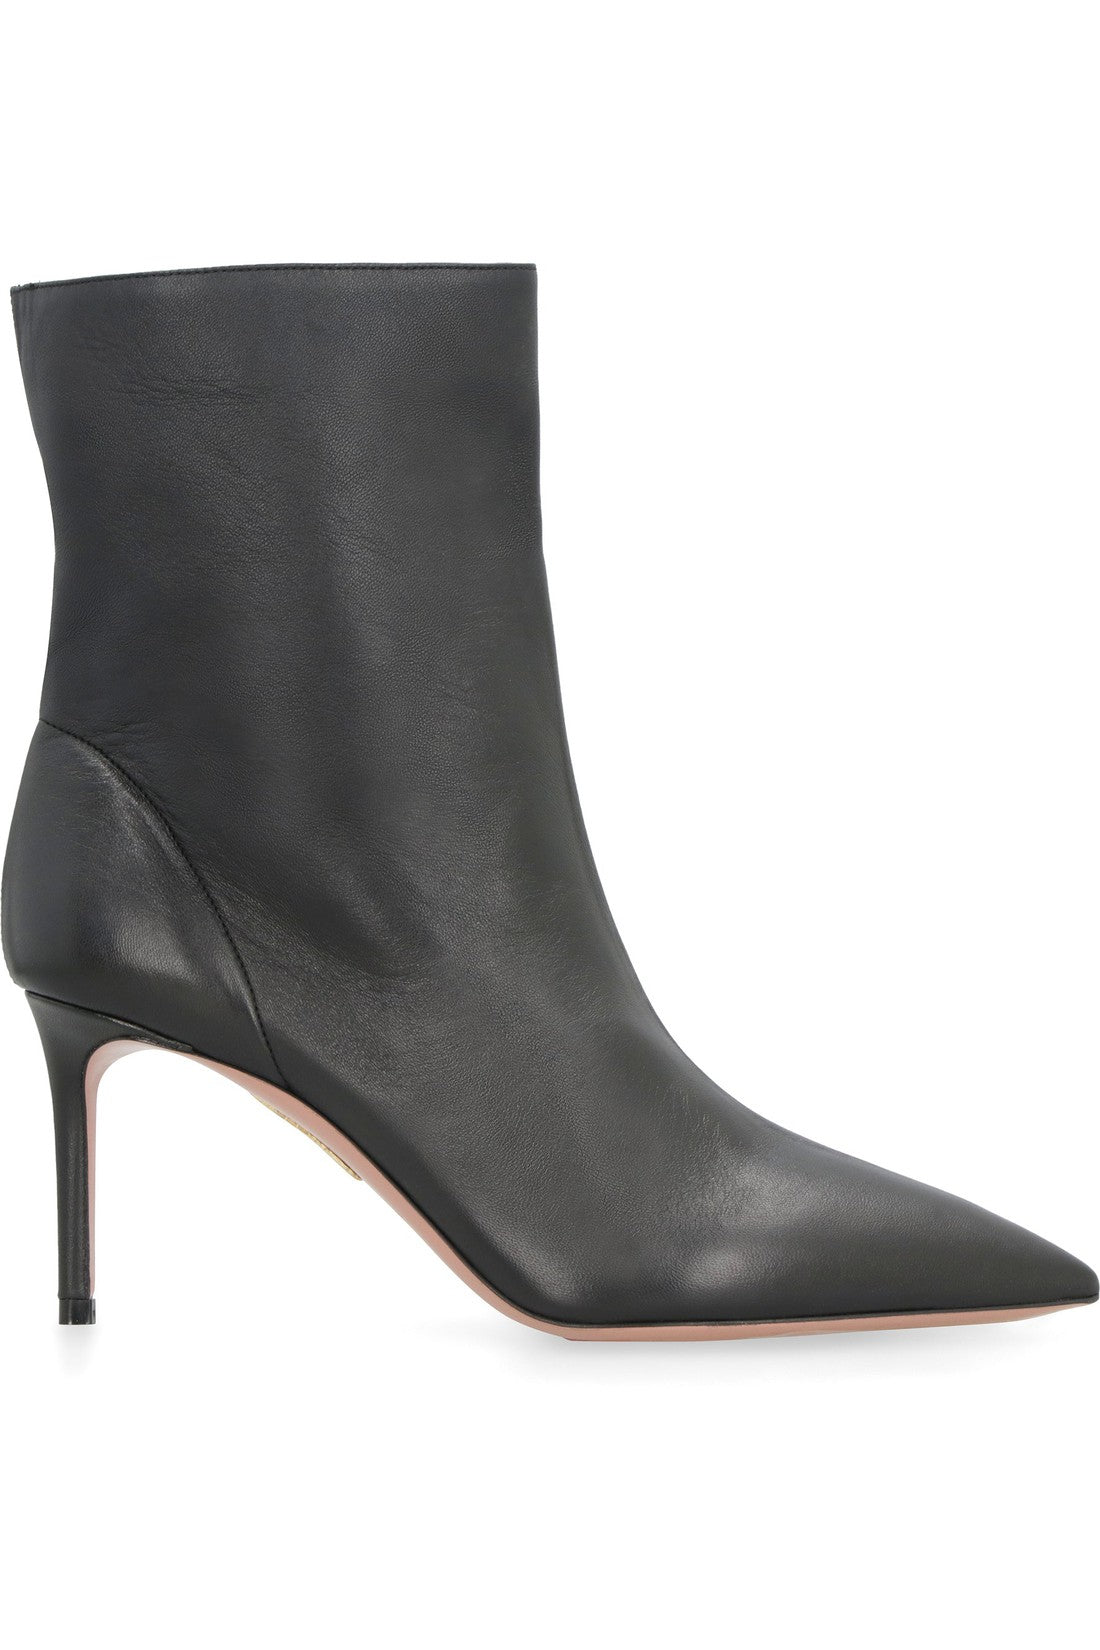 Aquazzura-OUTLET-SALE-Matignon leather pointy-toe ankle boots-ARCHIVIST